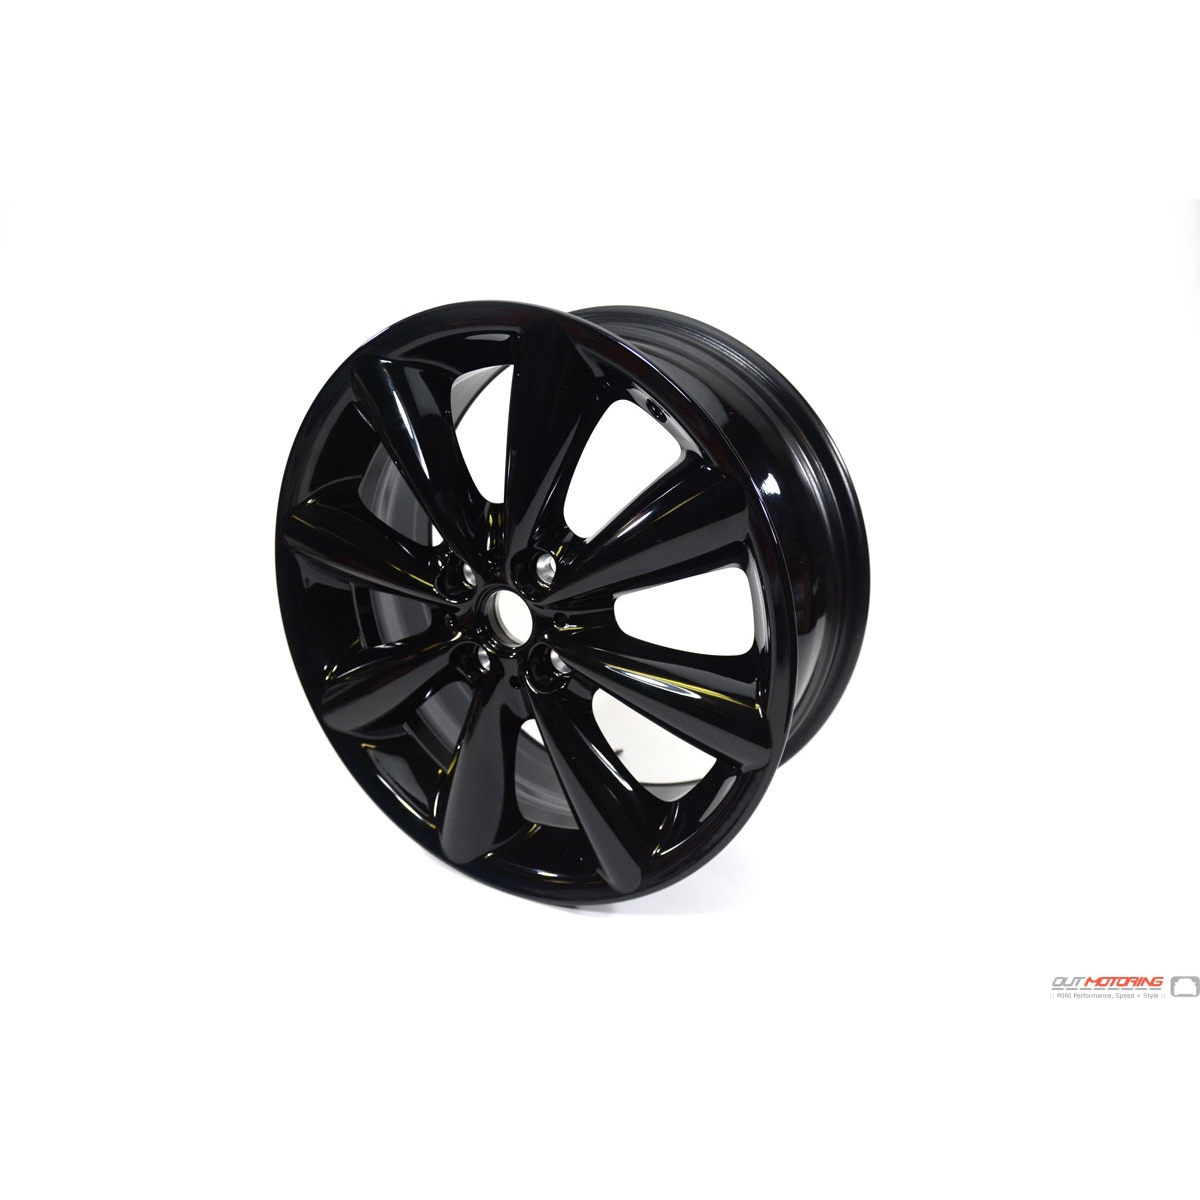 MINI Genuine 17 Inch Light Alloy Wheel Conical-Spoke R121 Black 36116791931 